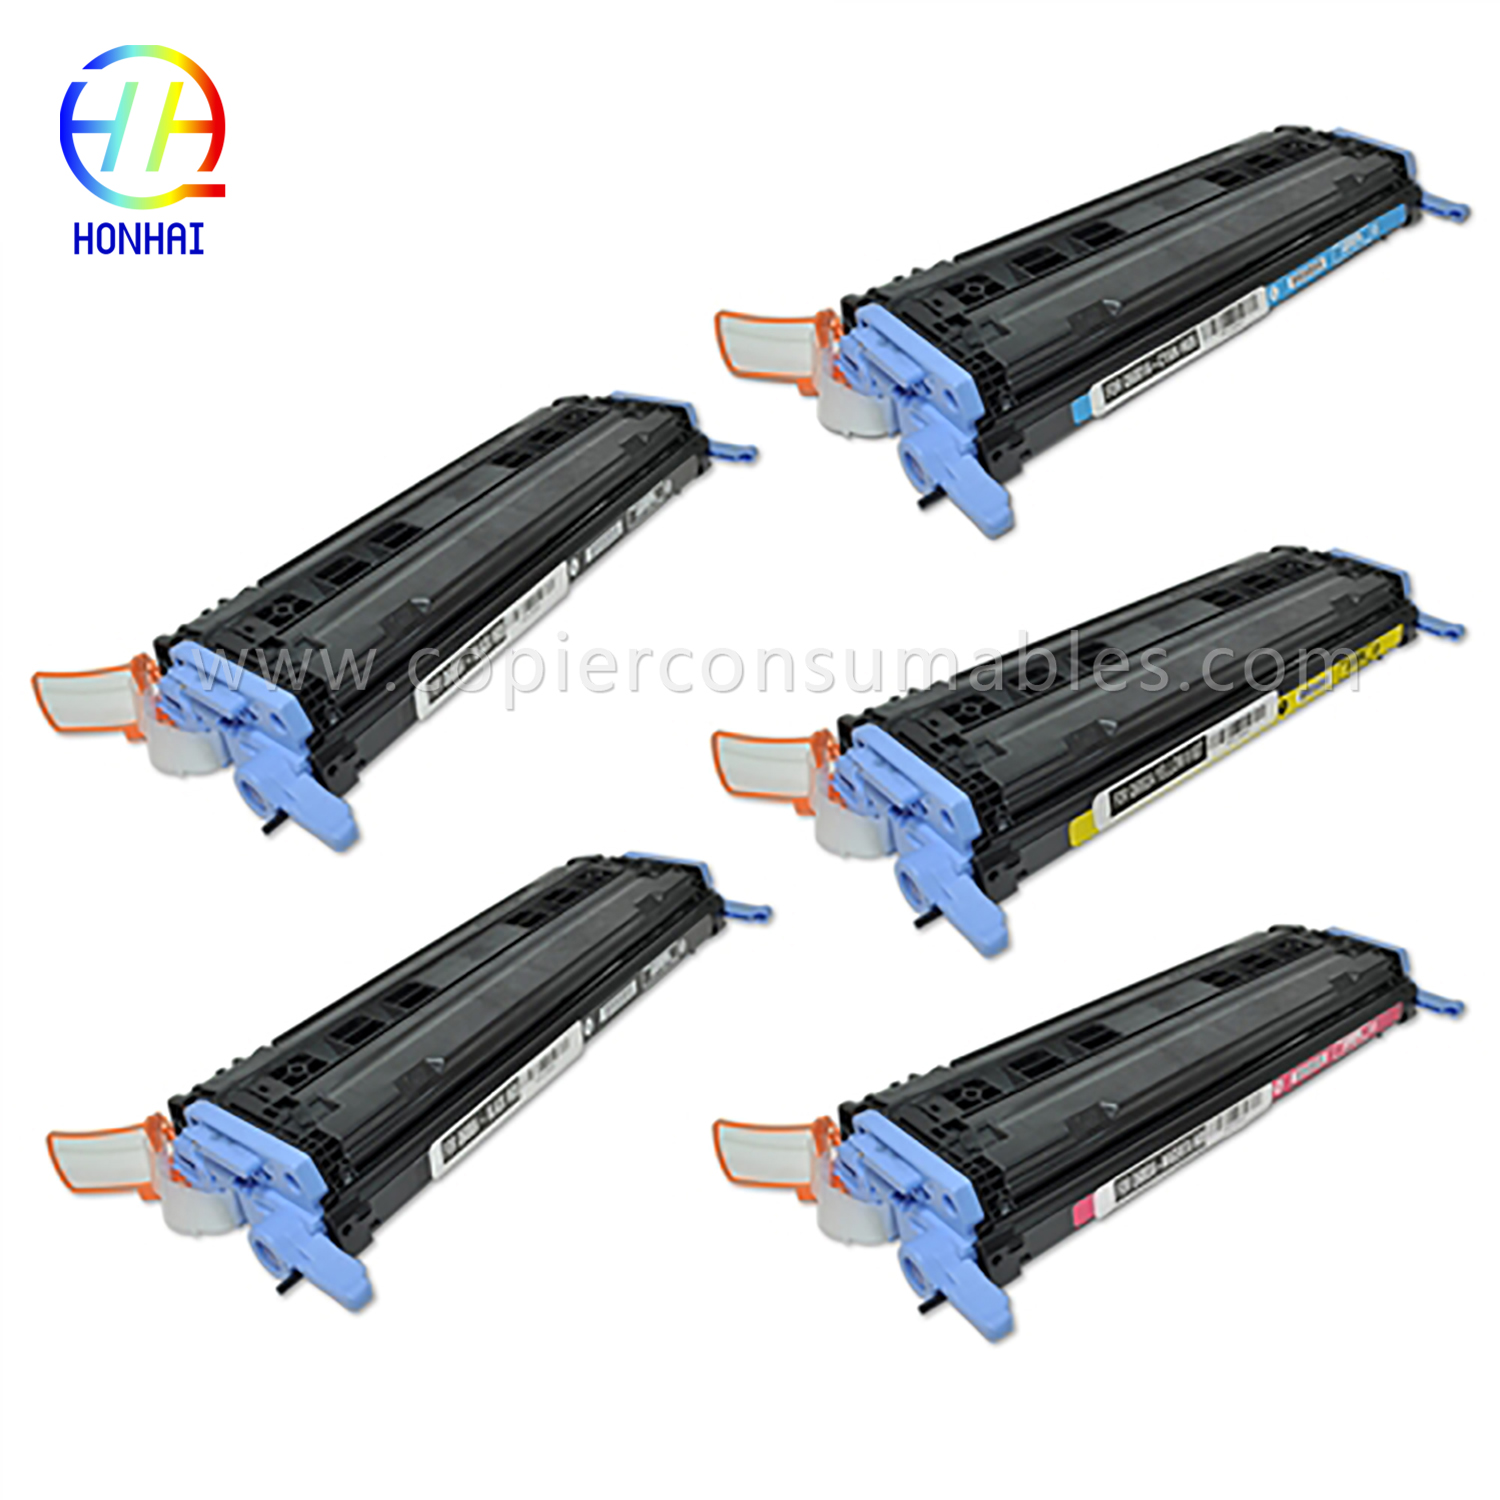 Toner Cartridge for HP Laserjet 1600 2600 2605 Cm1015mfp Cm1017mfp (Q6000A Q6001A Q6002A Q6003A)